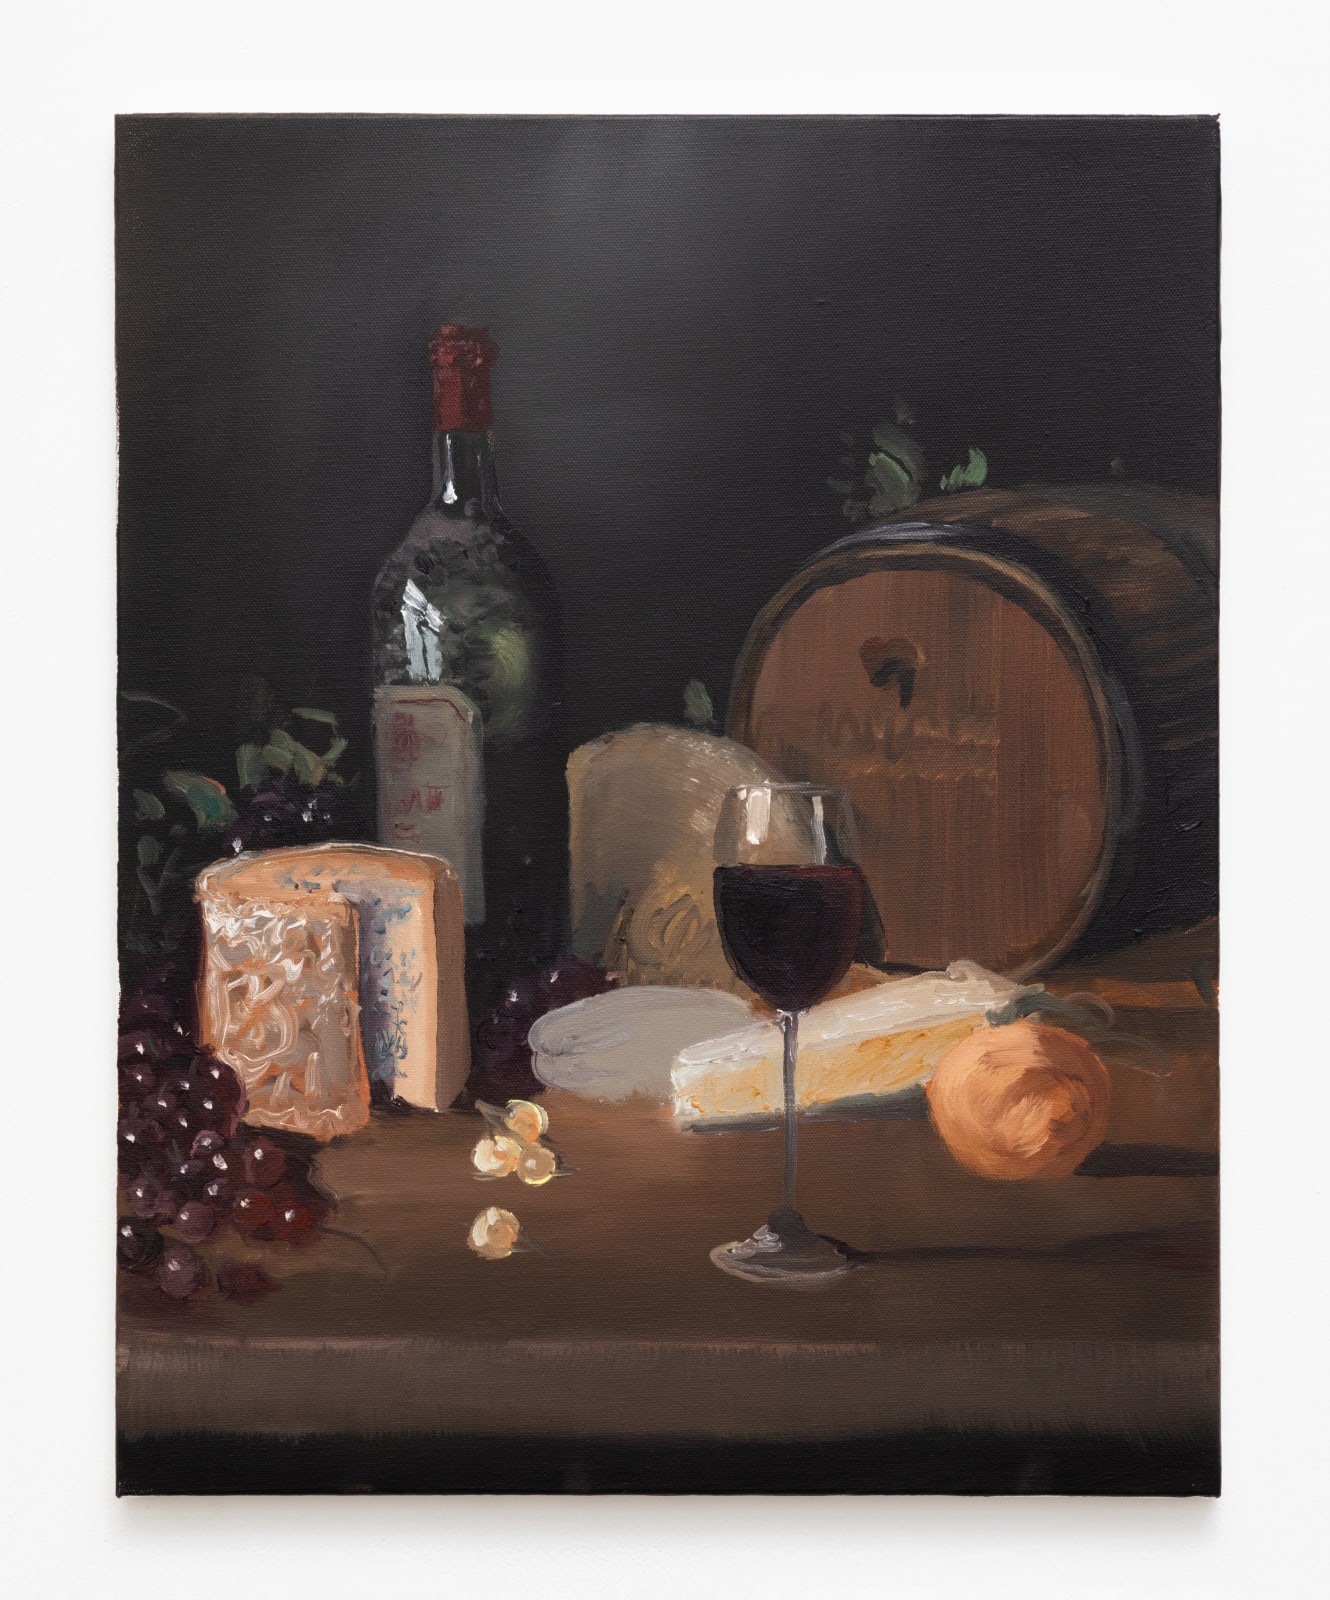 Clark Filio, Wine and Cheese, 2019